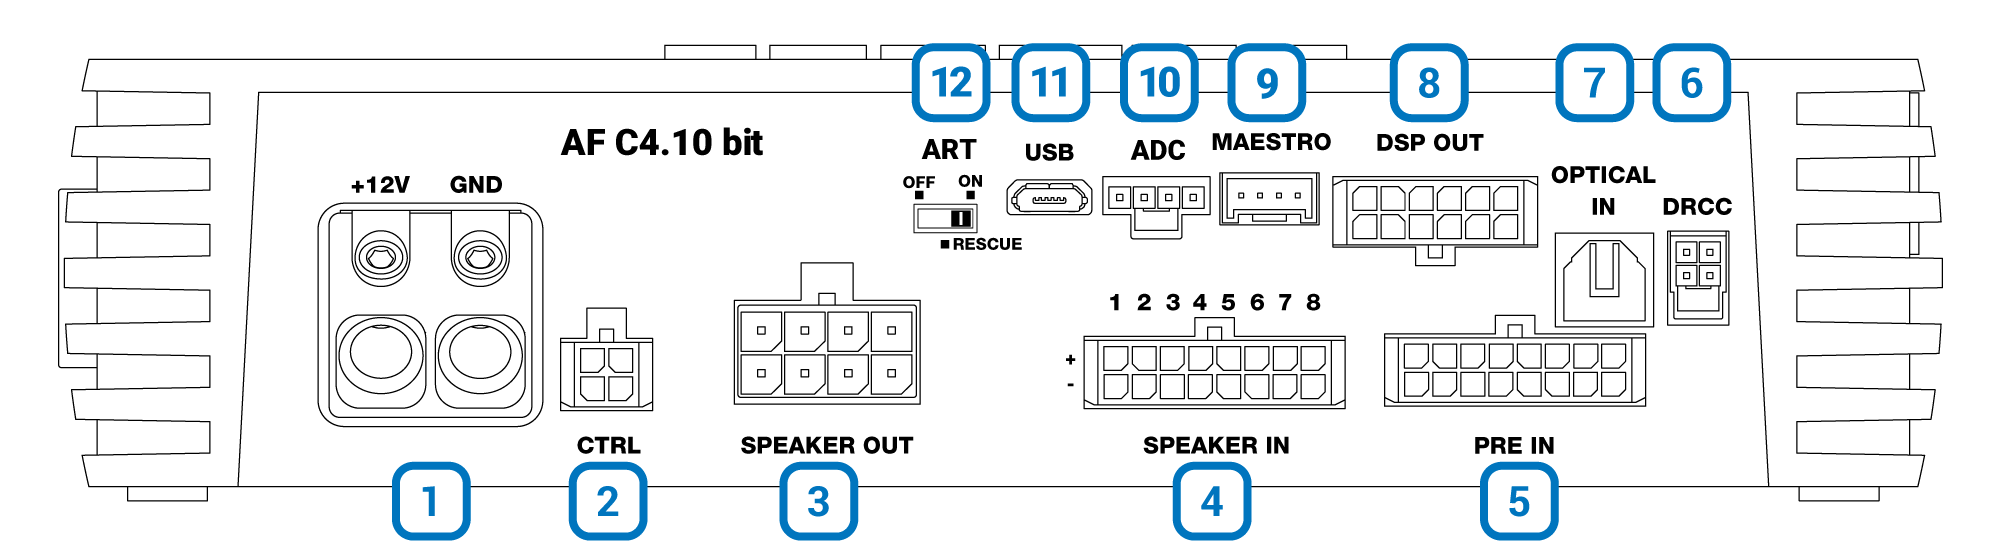 descrizione-pannelli-connessione-AF-C4.10-bit_2.png